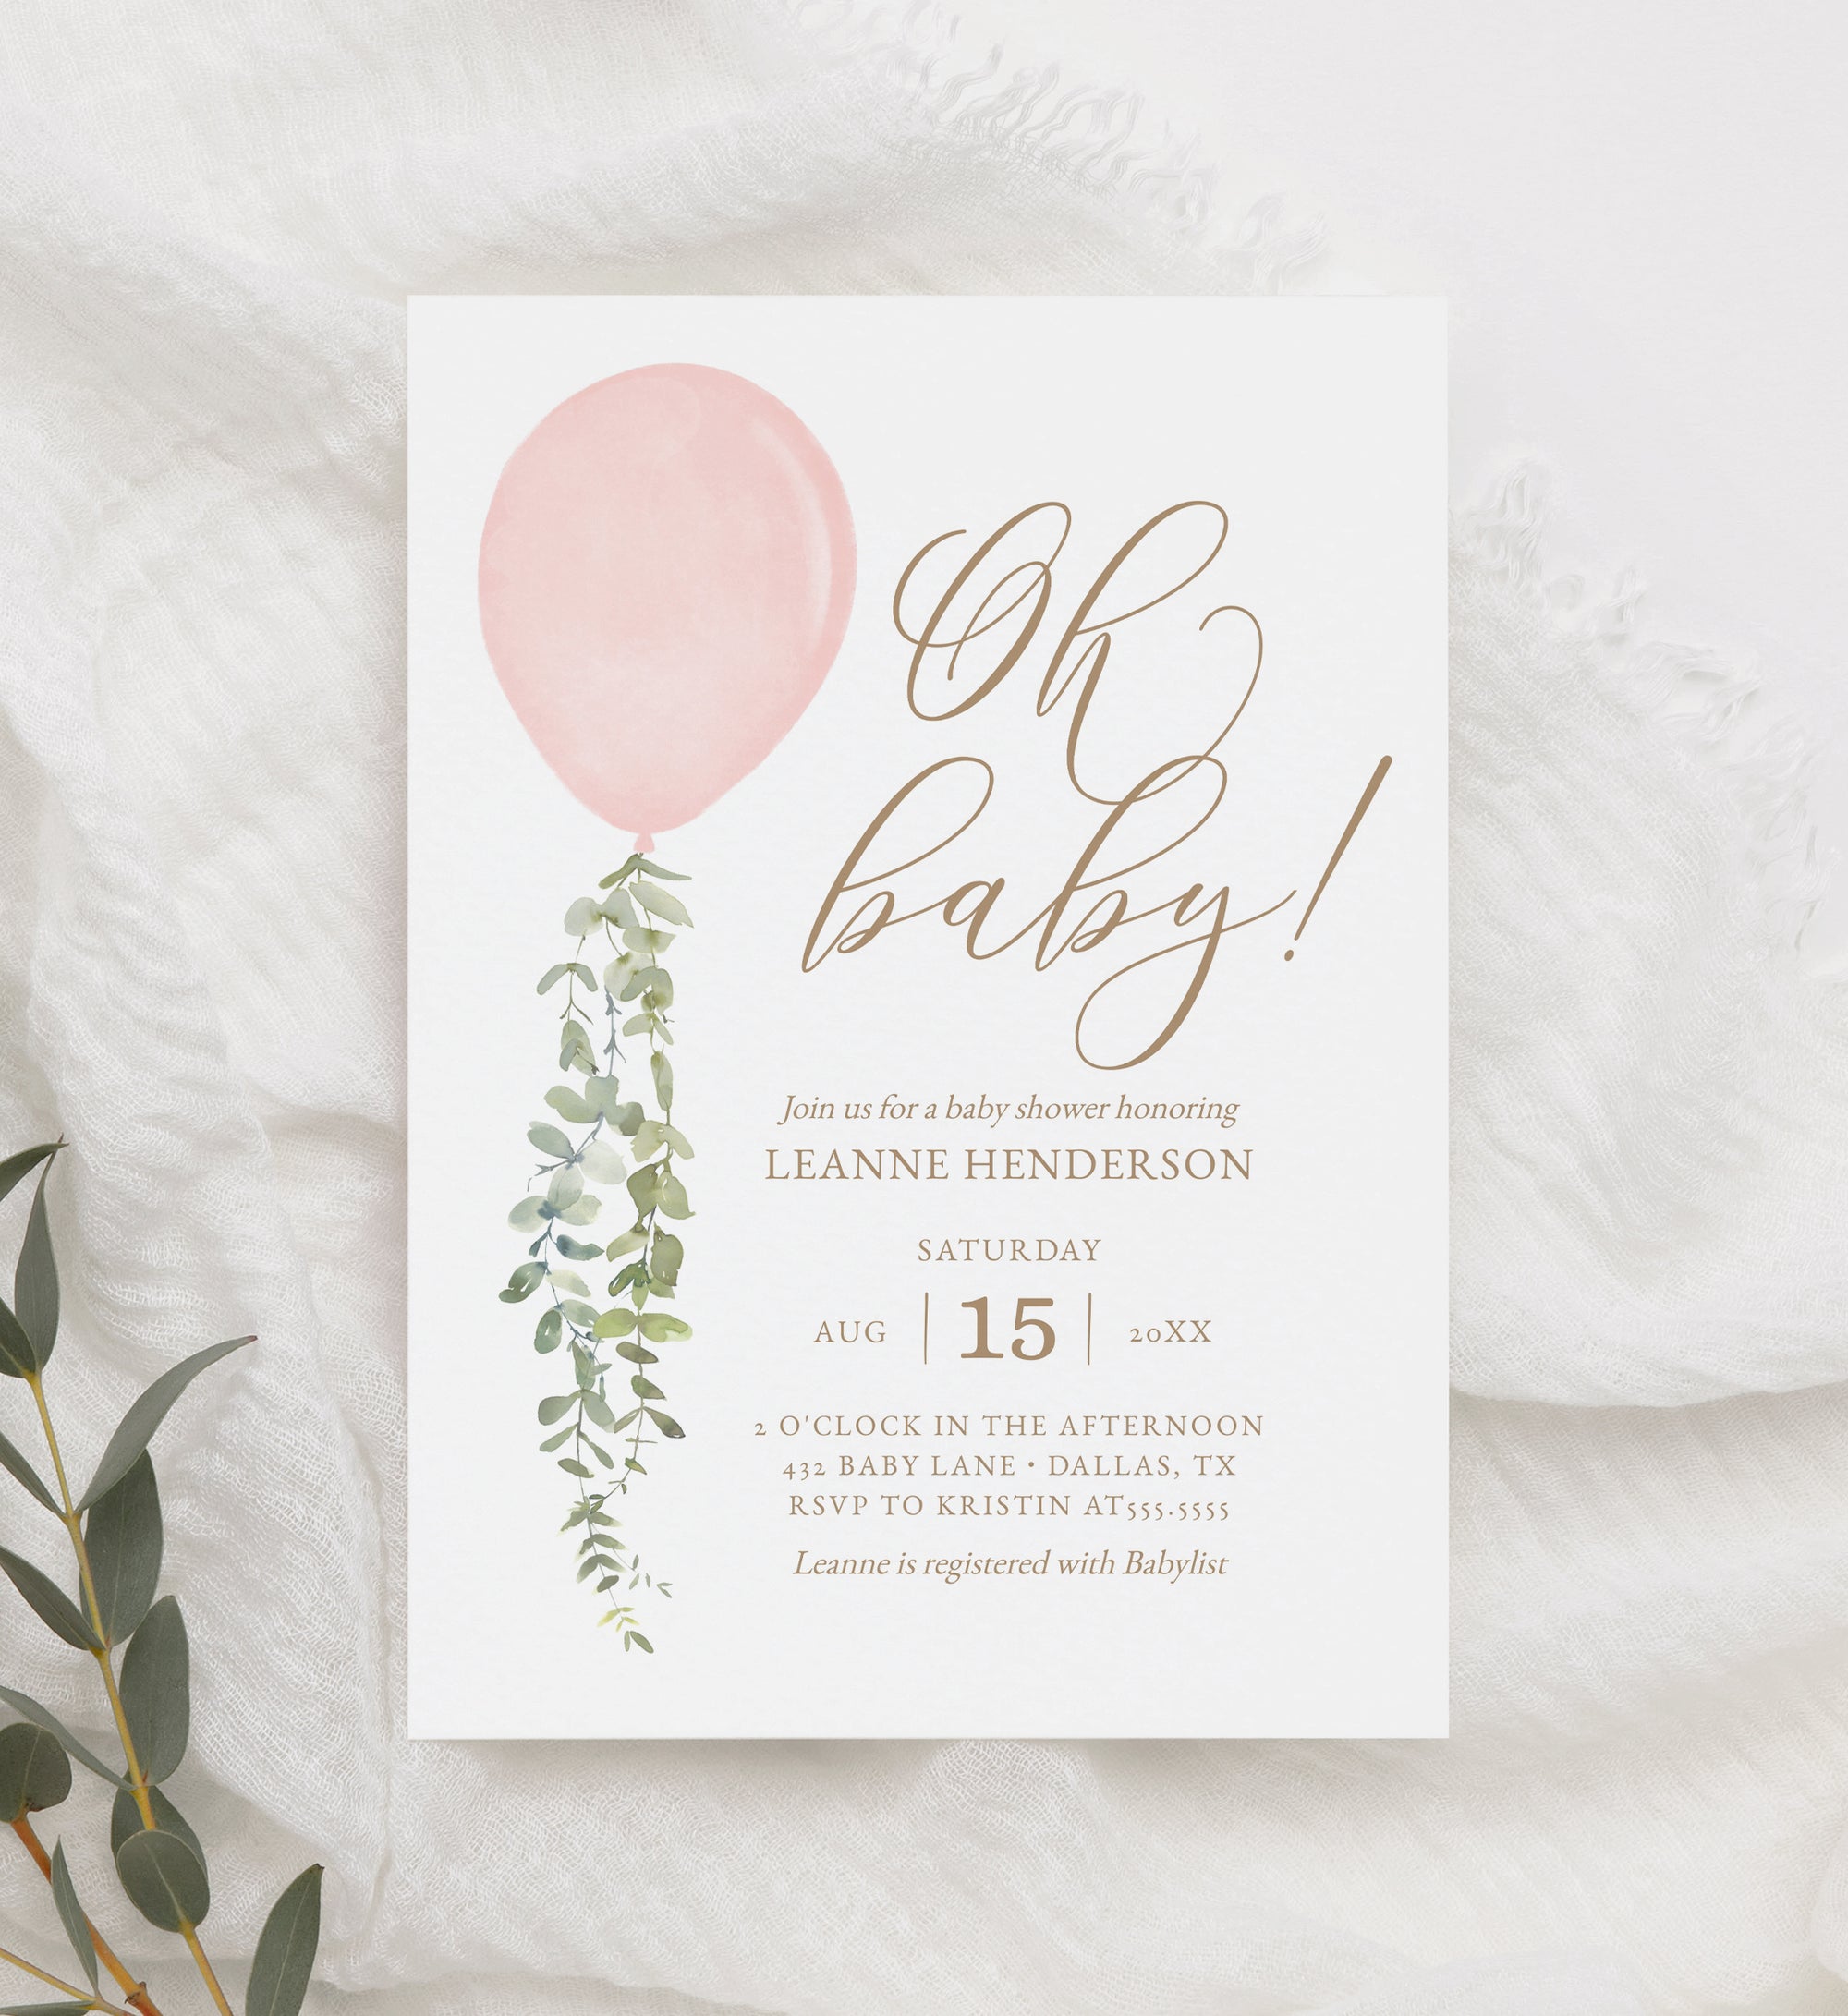 Editable Pink Balloon Baby Shower Invitation Template